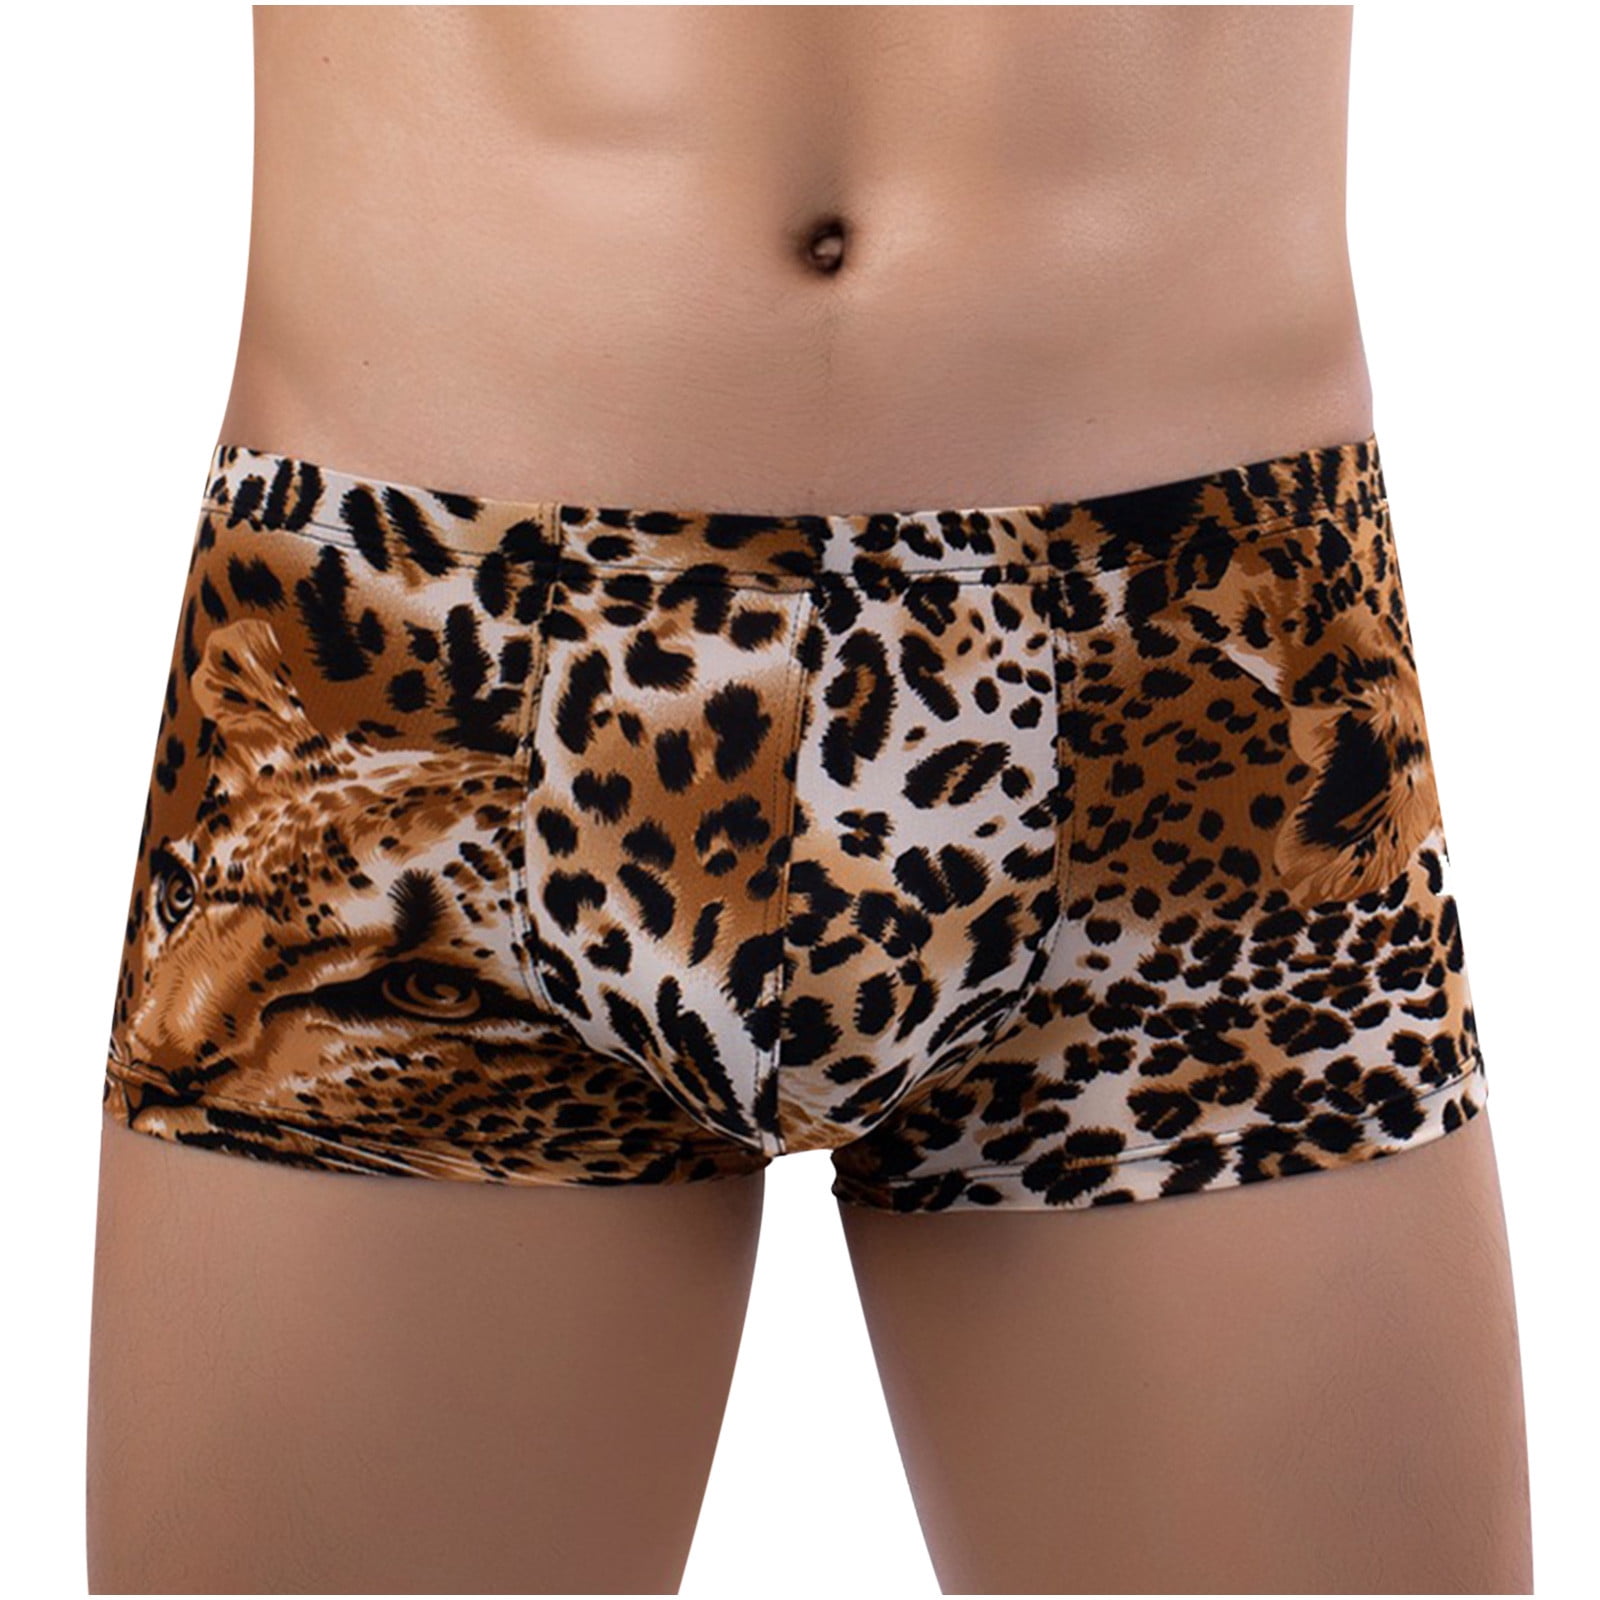 Honeeladyy Clearance Underwear Men Casual Fashion Leopard Print Attractive Breathable Boxers Briefs - Walmart.com